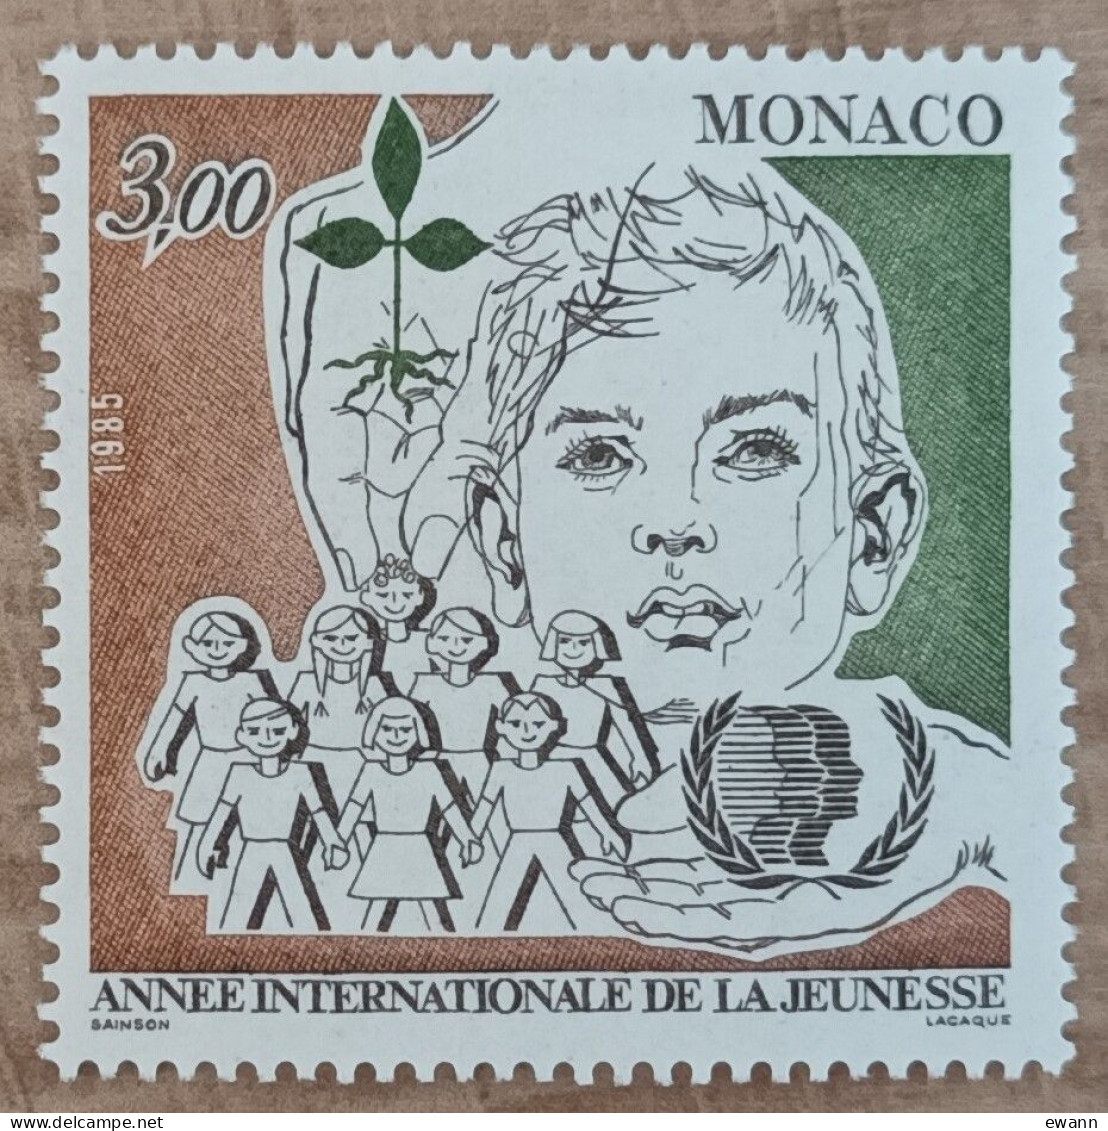 Monaco - YT N°1478 - Année Internationale De La Jeunesse - 1985 - Neuf - Ongebruikt